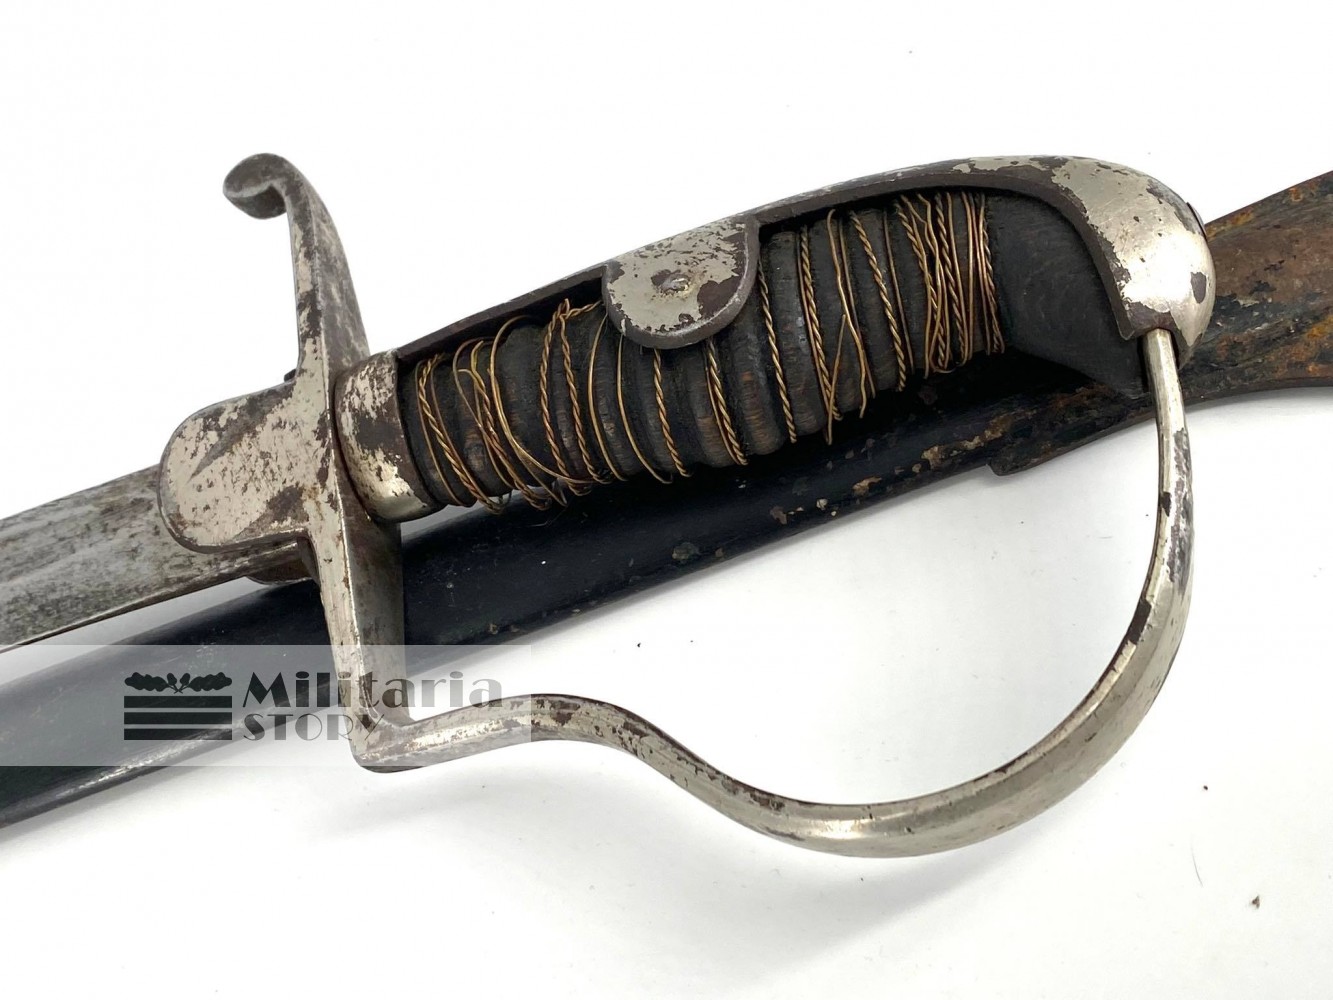 SSVT Sword Rare - SSVT Sword Rare: Vintage German Edged weapon